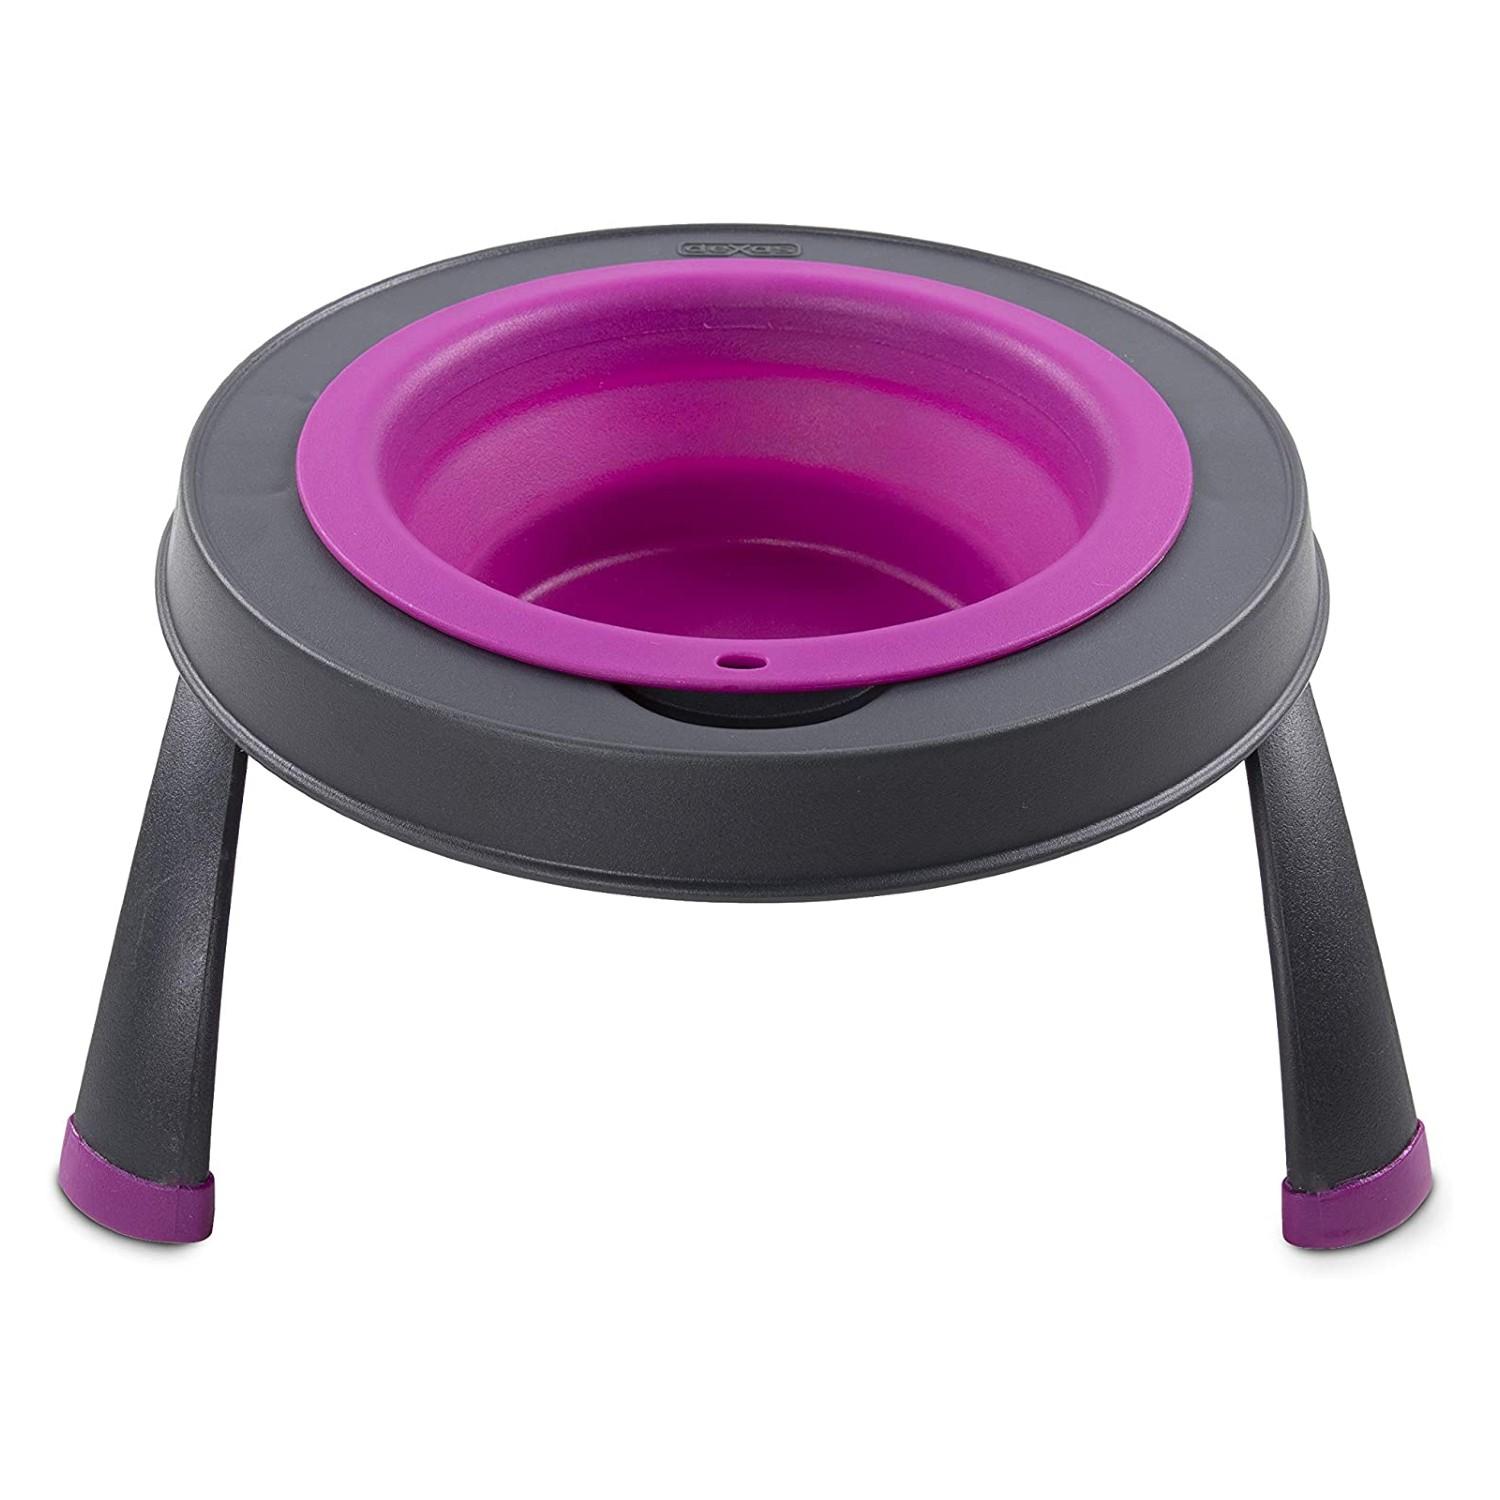 Dexas Single Elevated Dog Bowl by Popware - Fuchsia Pink